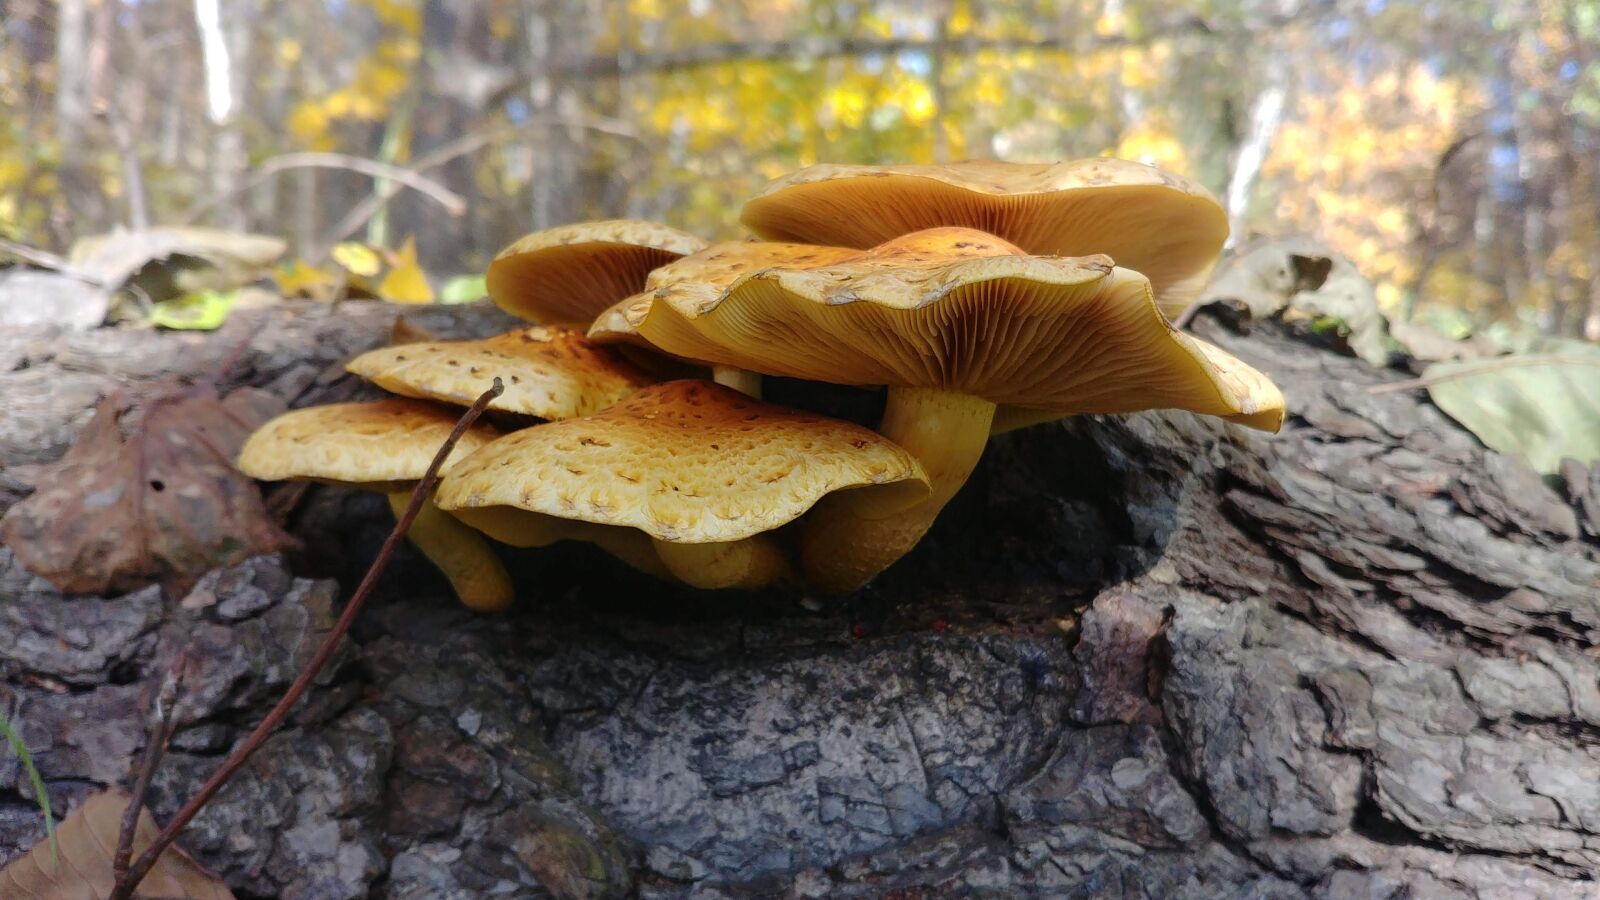 LG G6 sample photo. Mushrooms, autumn, nature photography